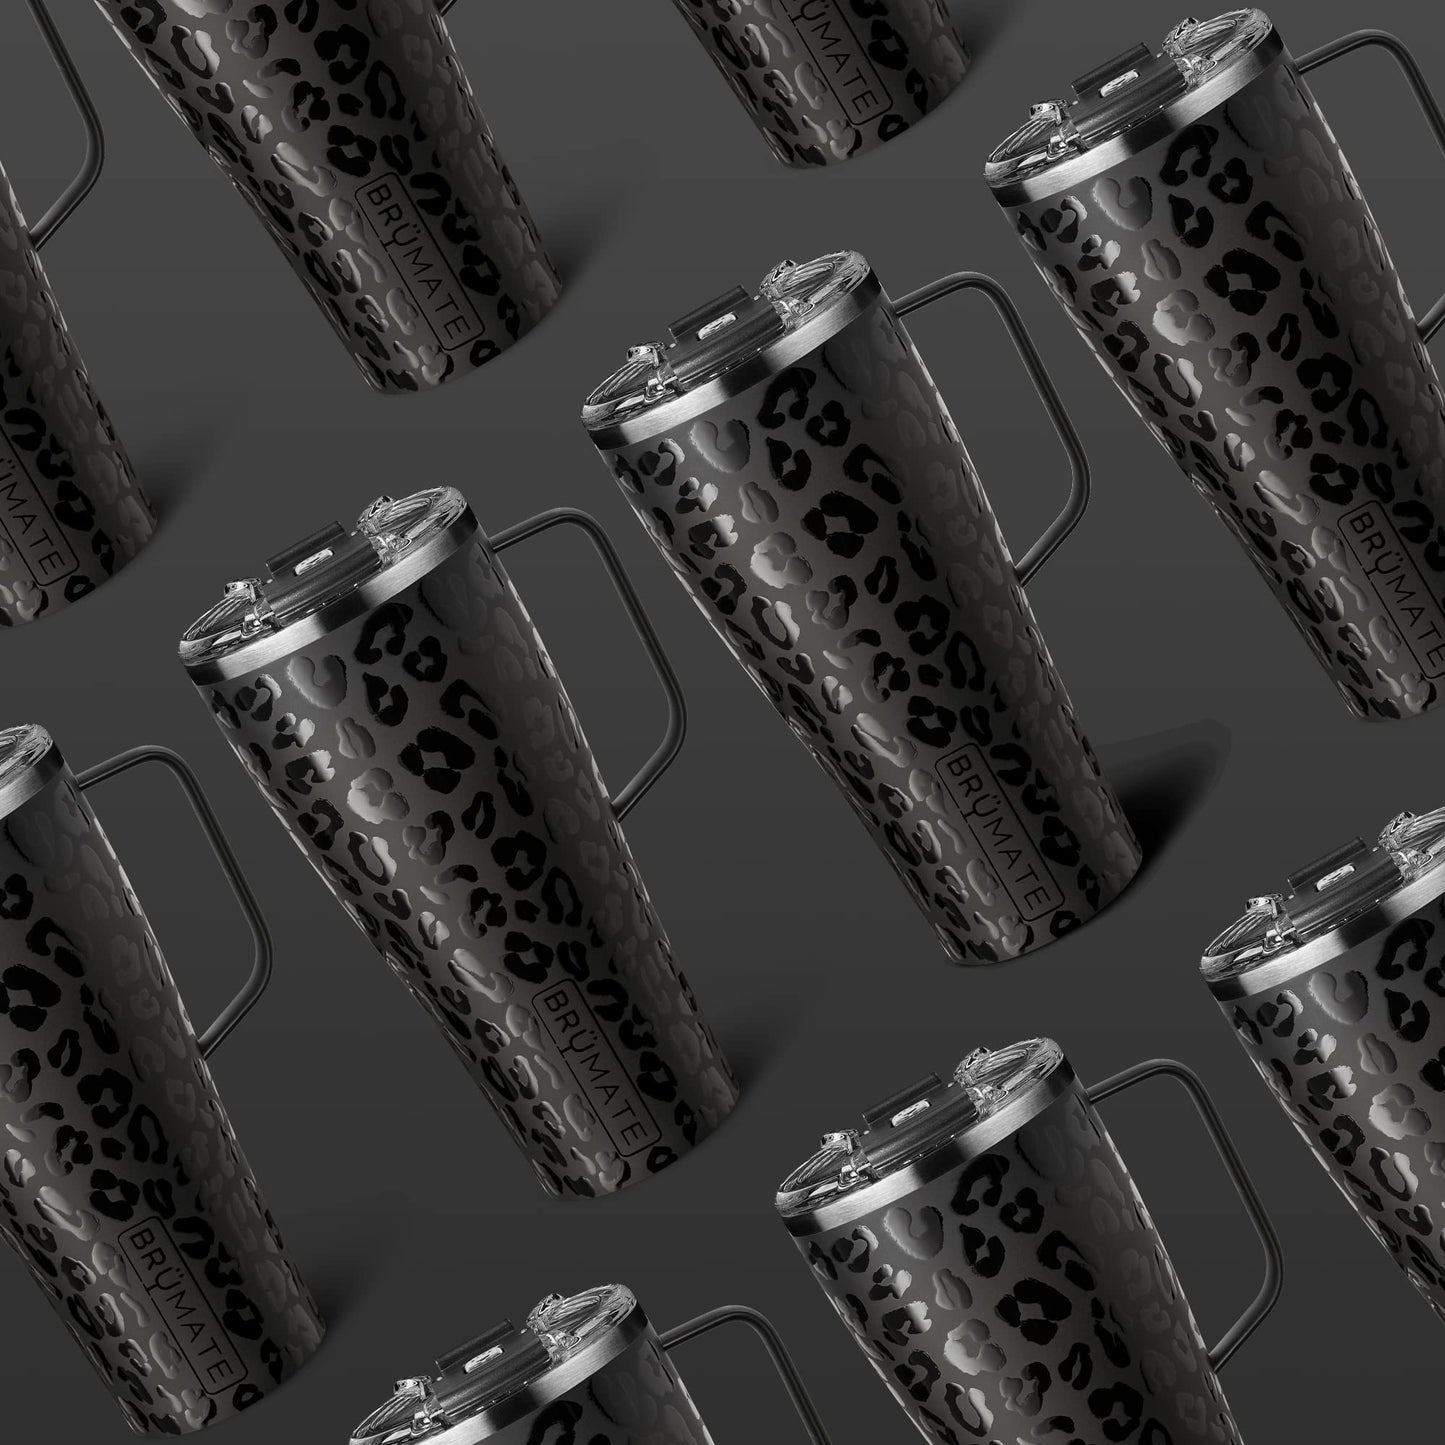 BrüMate Toddy XL - 32oz 100% Leak Proof Insulated Coffee Mug